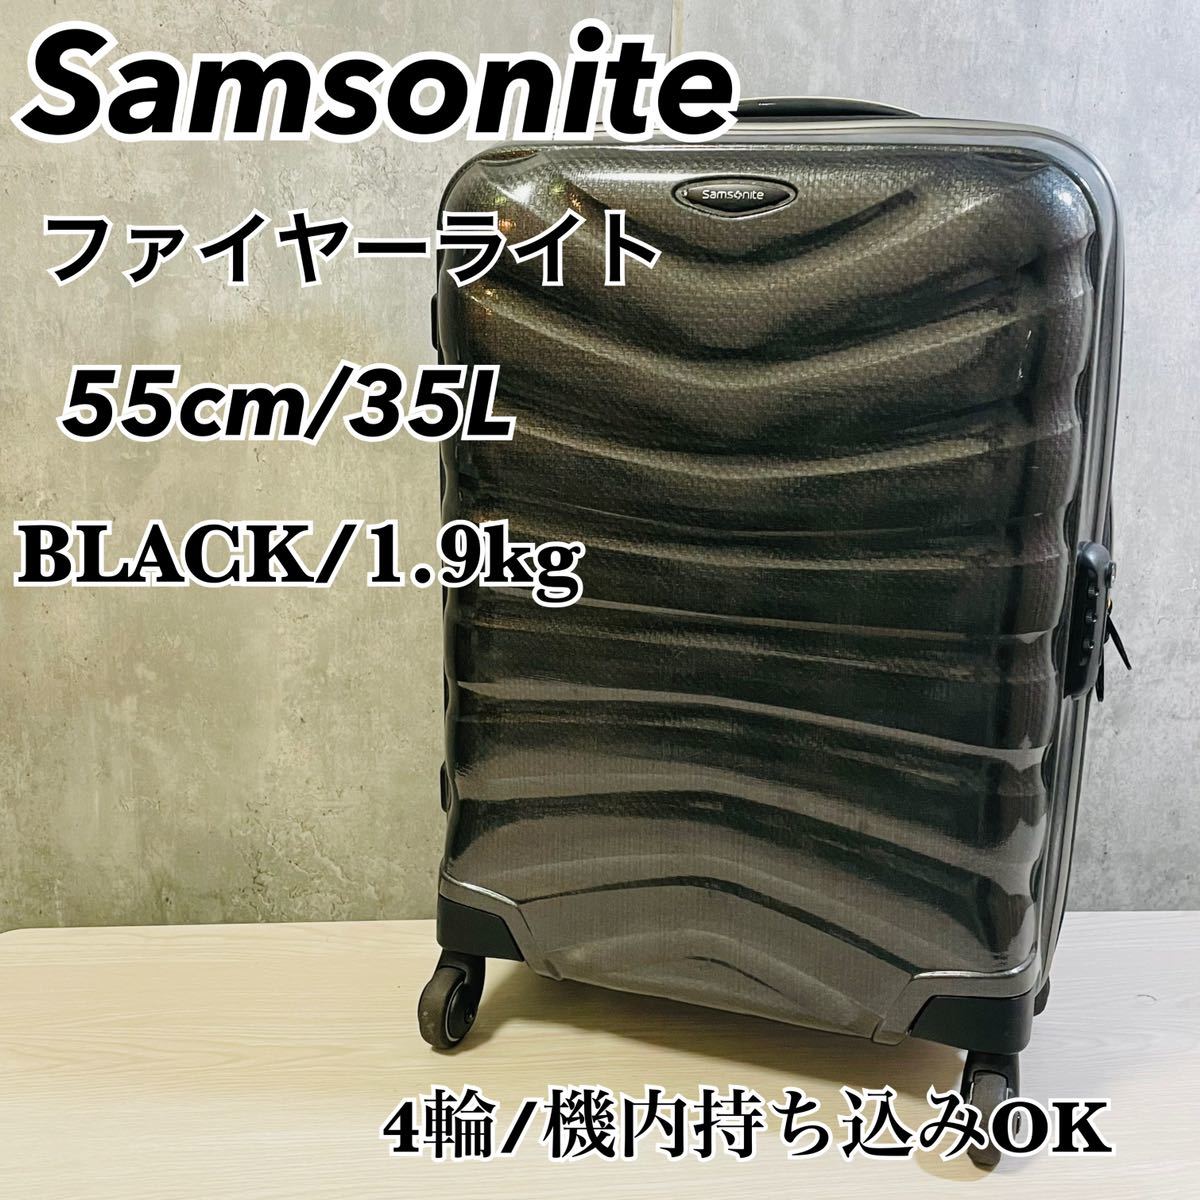 Samsonite サムソナイト ファイヤーライト 35L キャリーケース 4輪